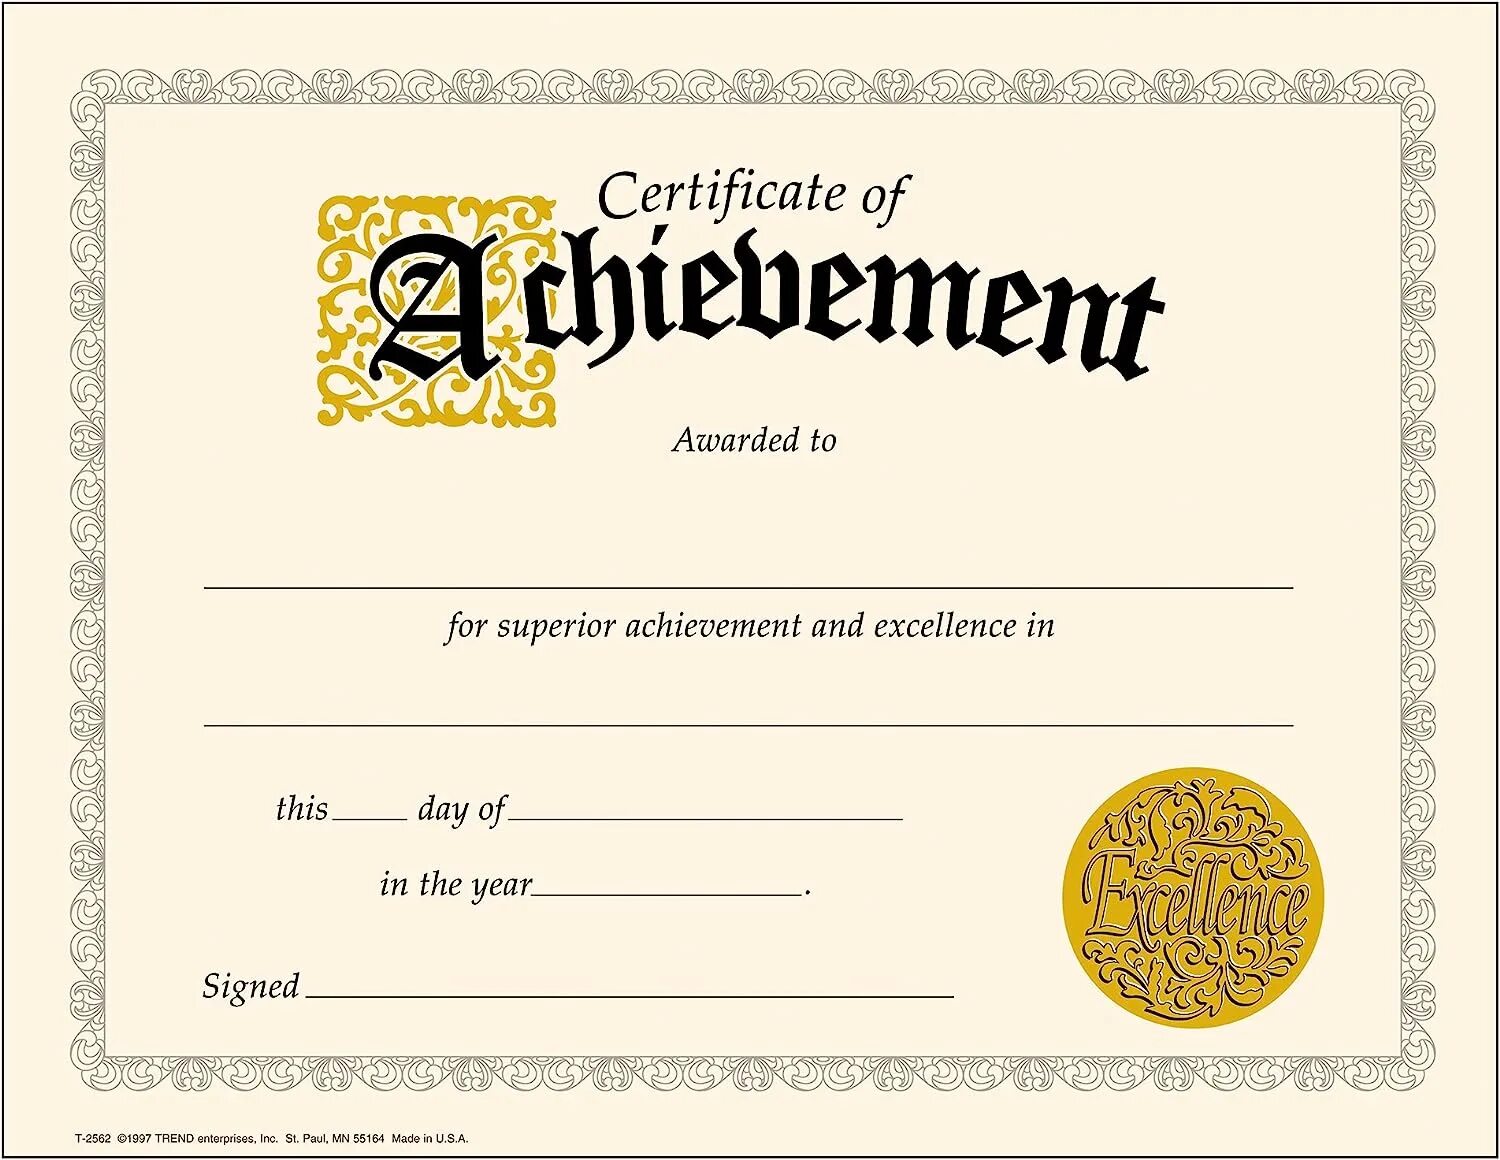 Peer certificate. Certificate of achievement. Макет сертификата Certificate of achievement. Сертификат по английскому языку. Грамота по английскому языку.